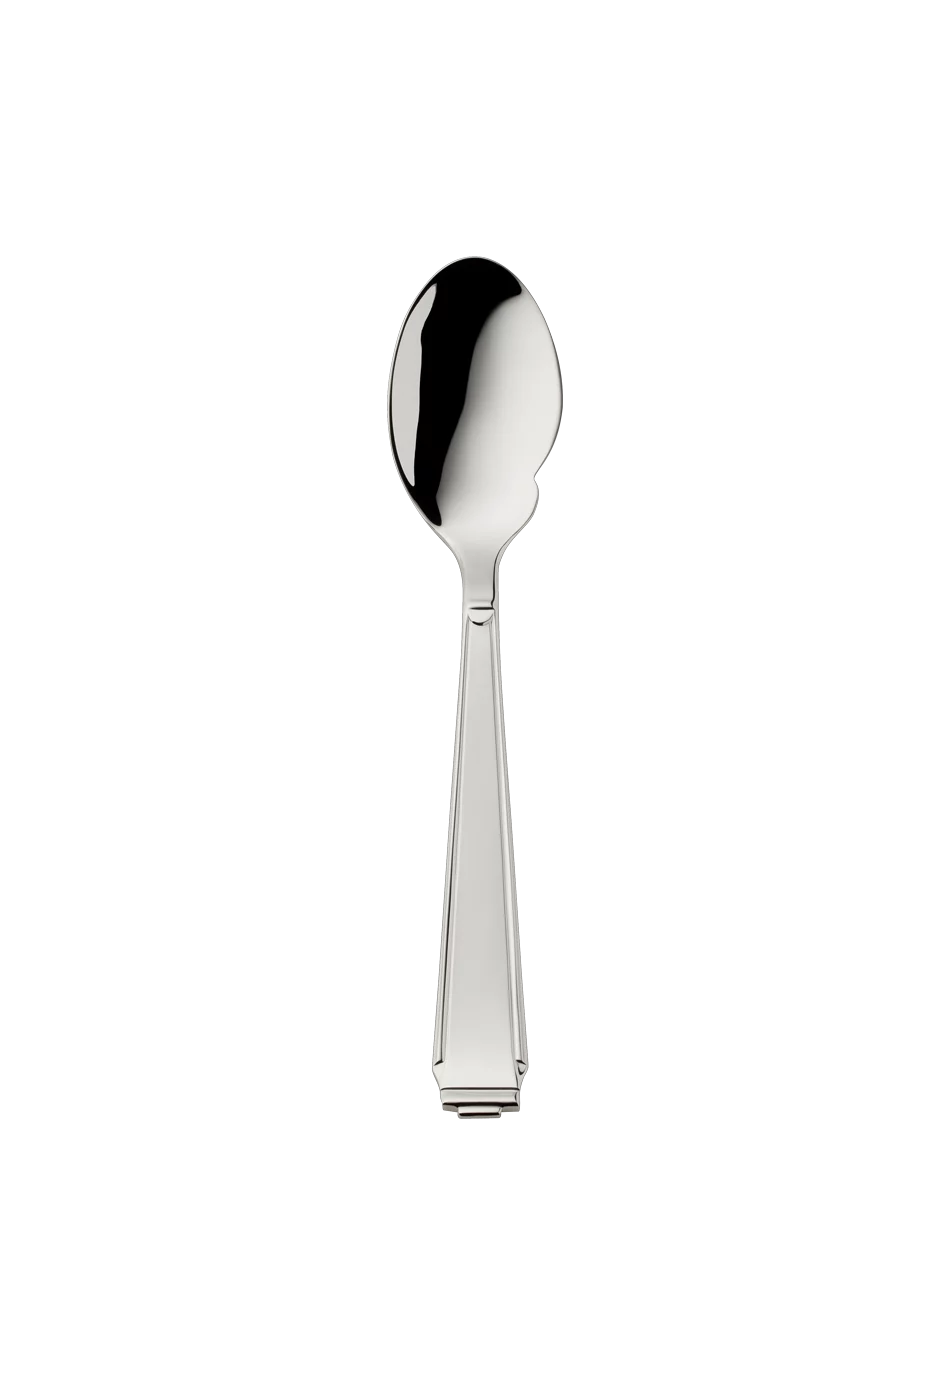 Art Deco Gourmet Spoon (150g massive silverplated)